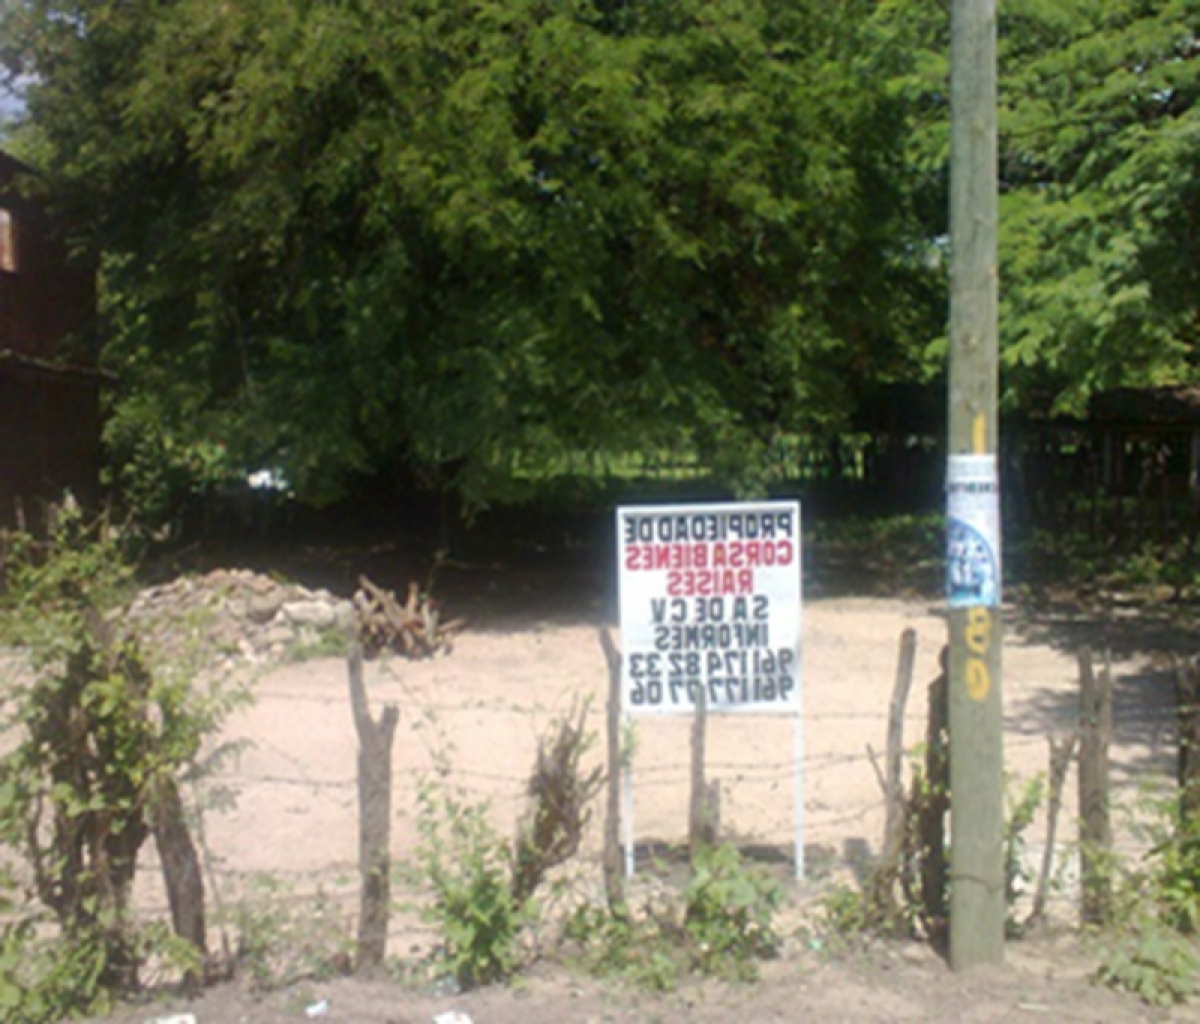 Picture of Residential Land For Sale in Chiapa De Corzo, Chiapas, Mexico